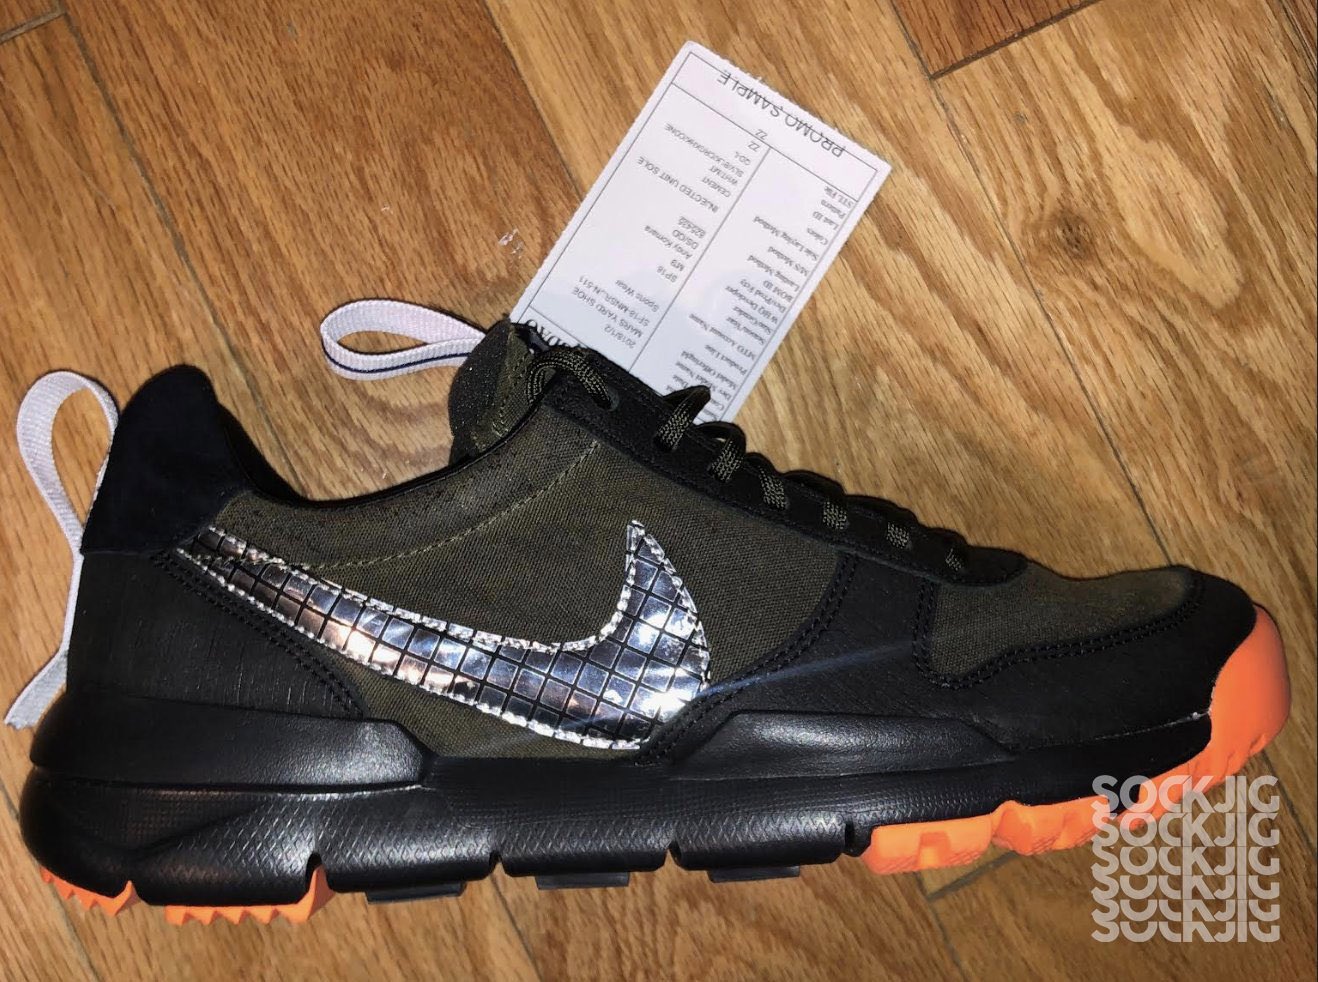 Periodiek herinneringen badminton Ovrnundr on Twitter: "Unseen Tom Sachs x Nike Mars Yard Shoe sample from  2018 in “Black/Orange” Photo: @sockjig https://t.co/O8FSYhiicf" / Twitter